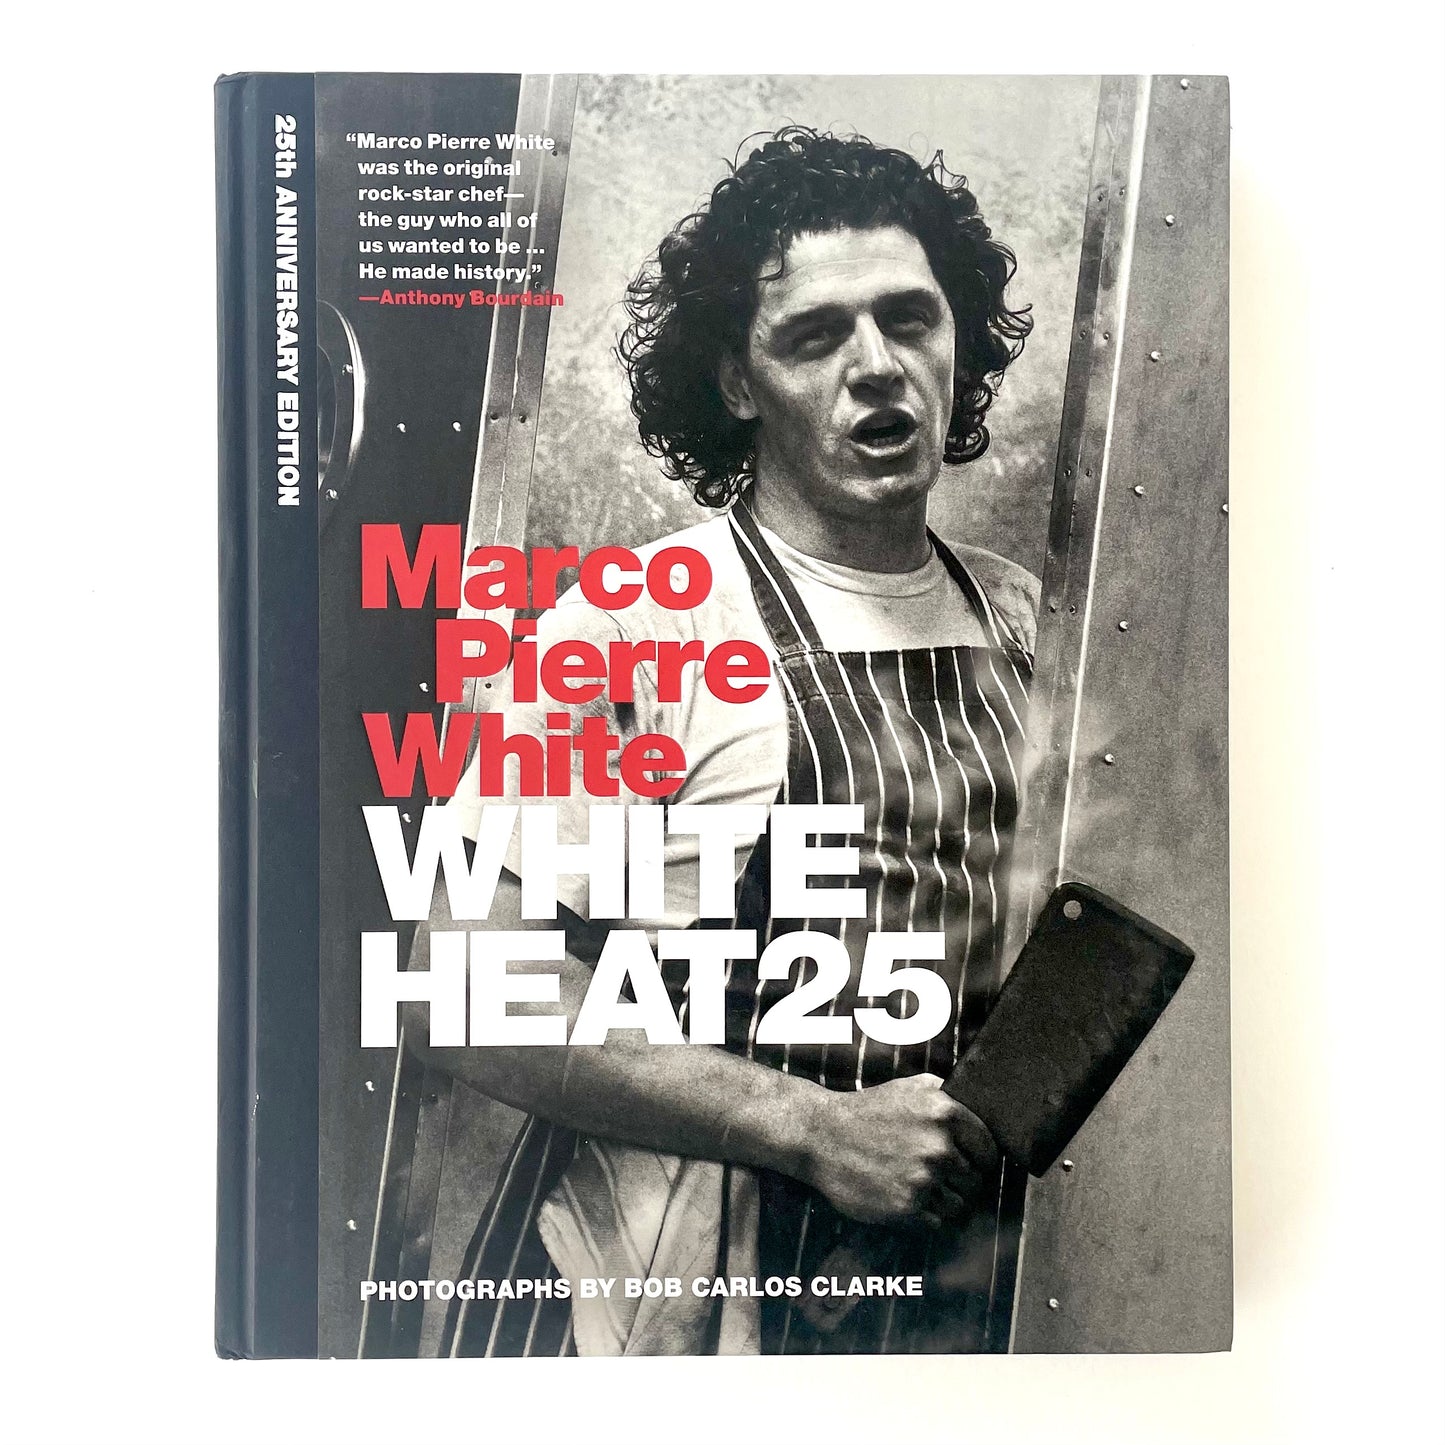 White Heat 25 by Marco Pierre White